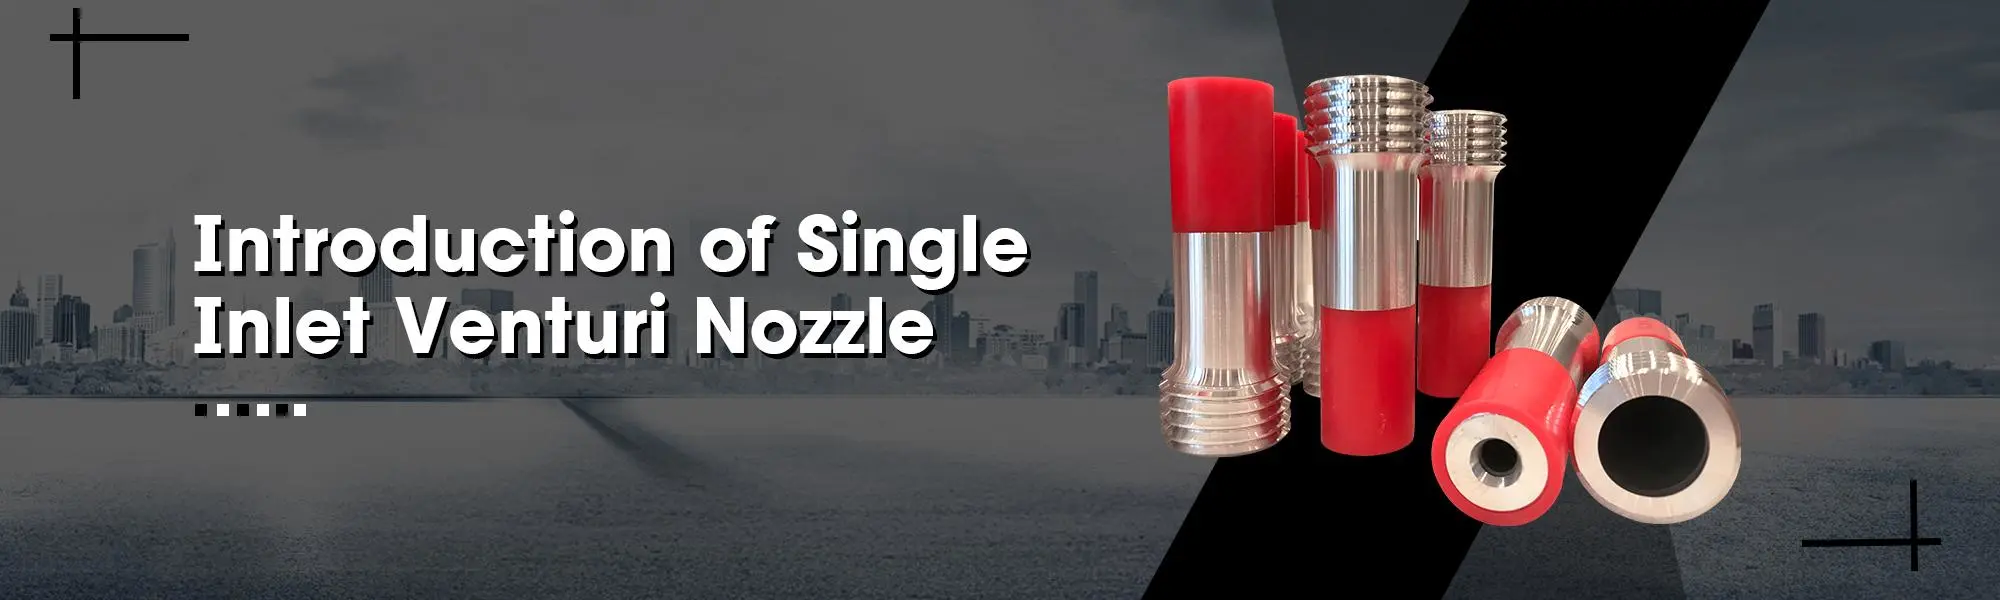 Introduction of Single Inlet Venturi Nozzle